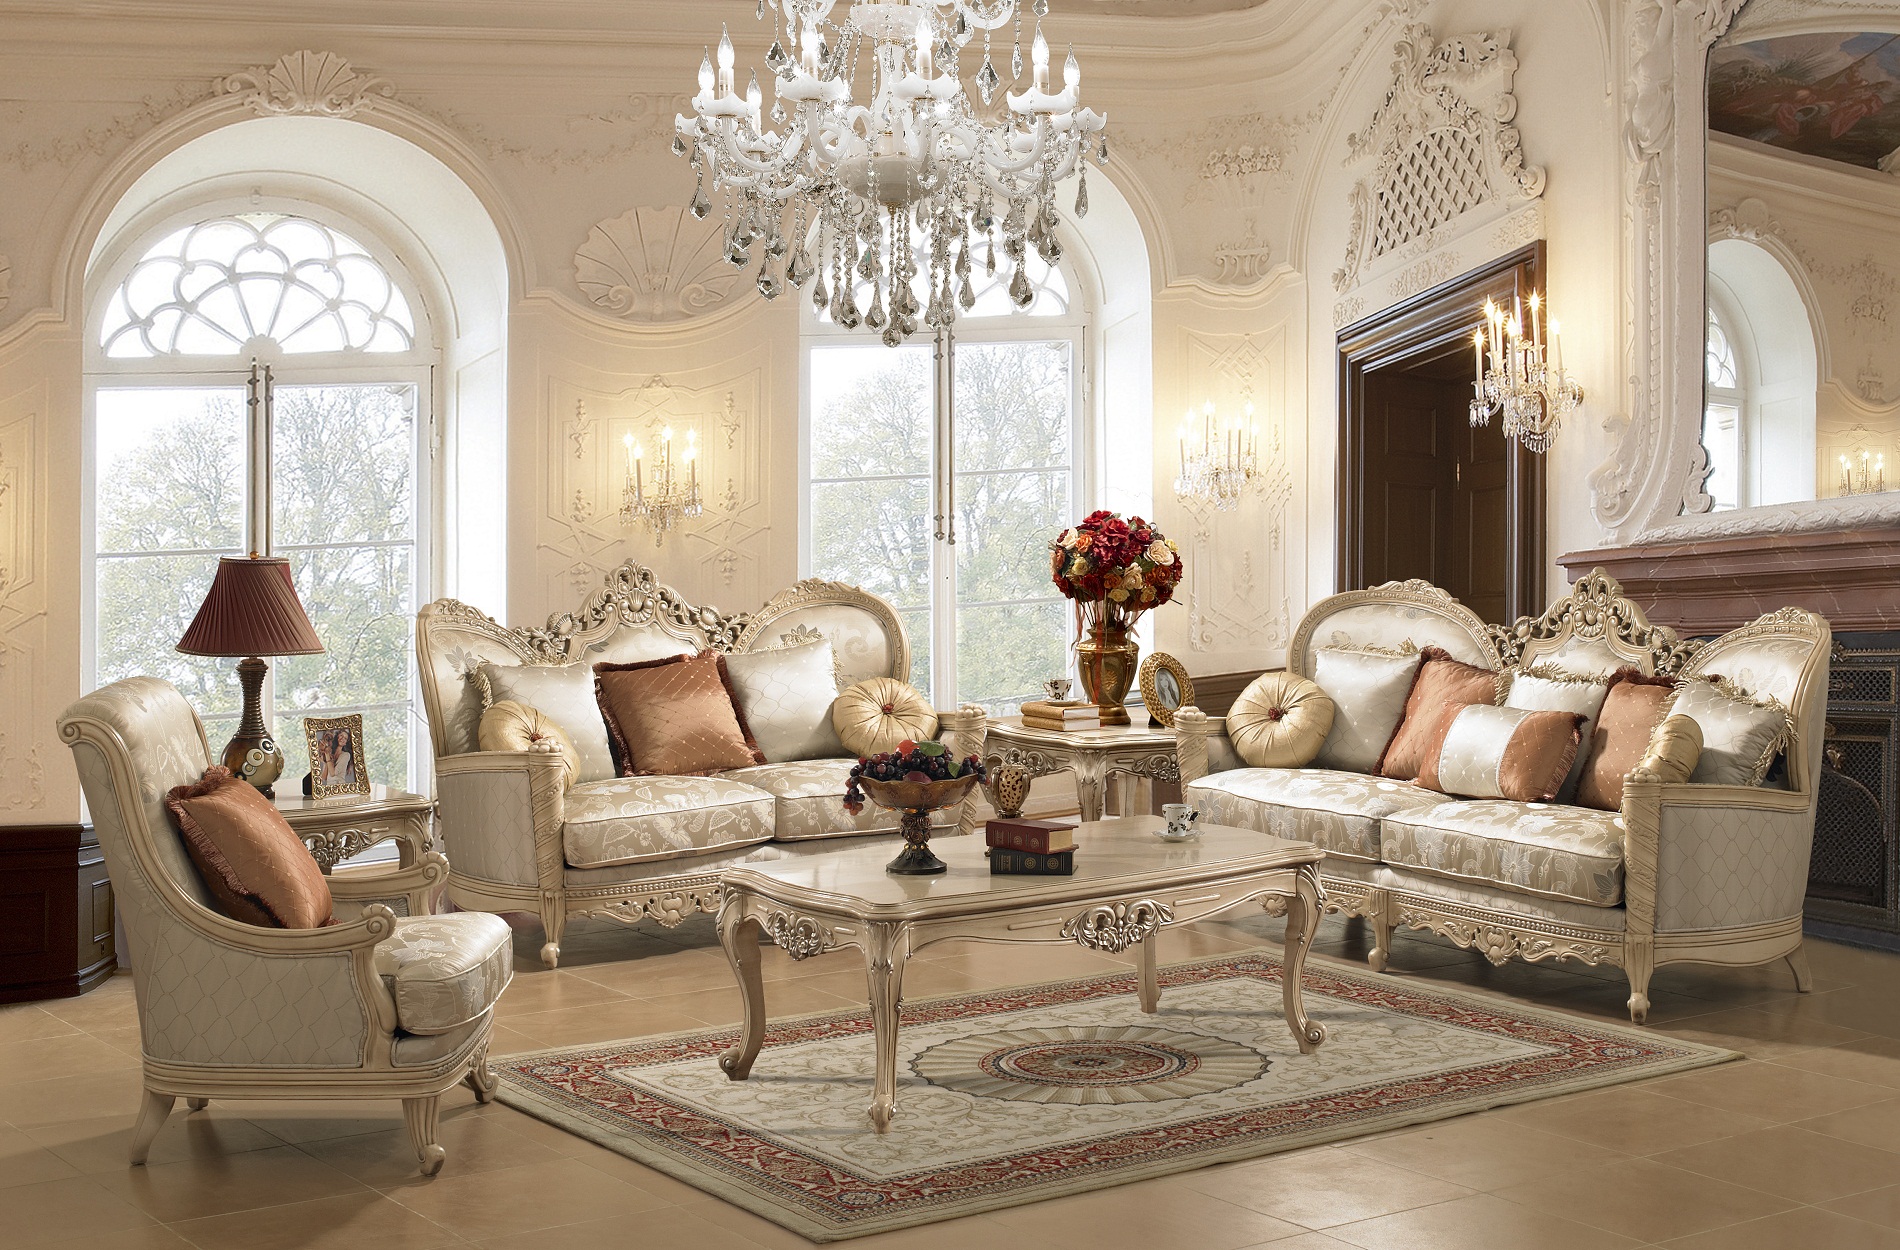 modern elegant living room ideas